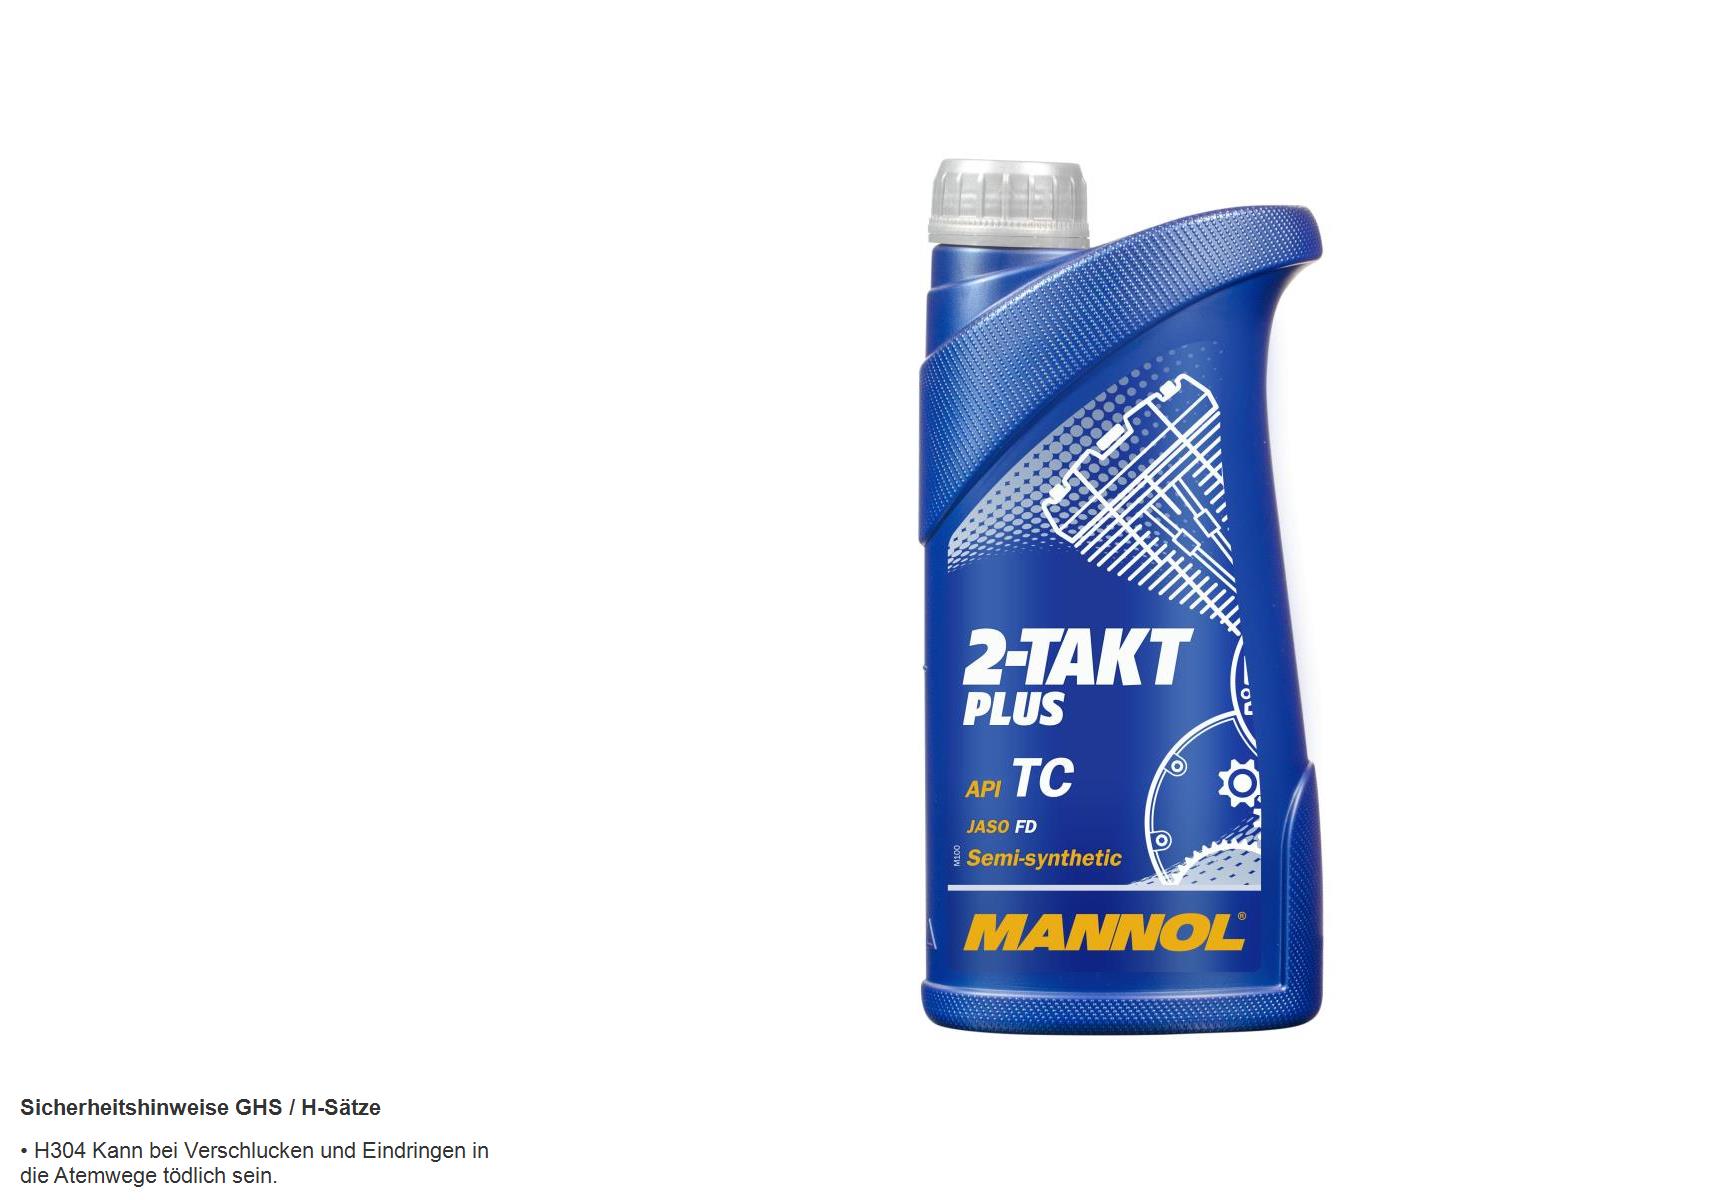 1 Liter MANNOL 2-Takt Plus API TC Öl Motorradöl Scooter MN7204-1 Teilsynthetisch